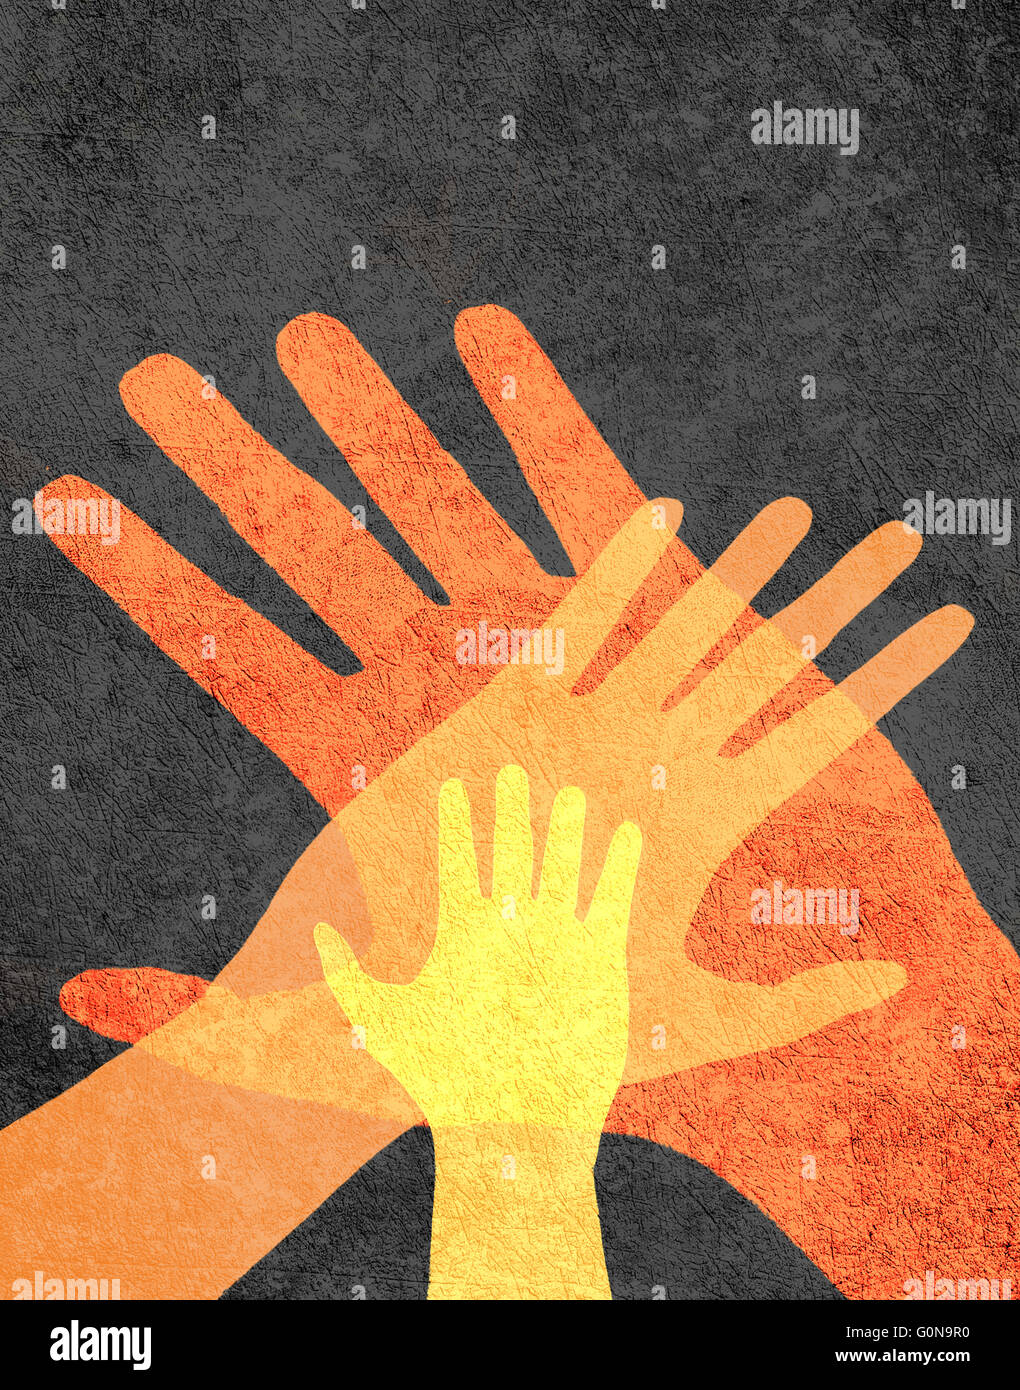 three hands orange on black digital illustration Stock Photo